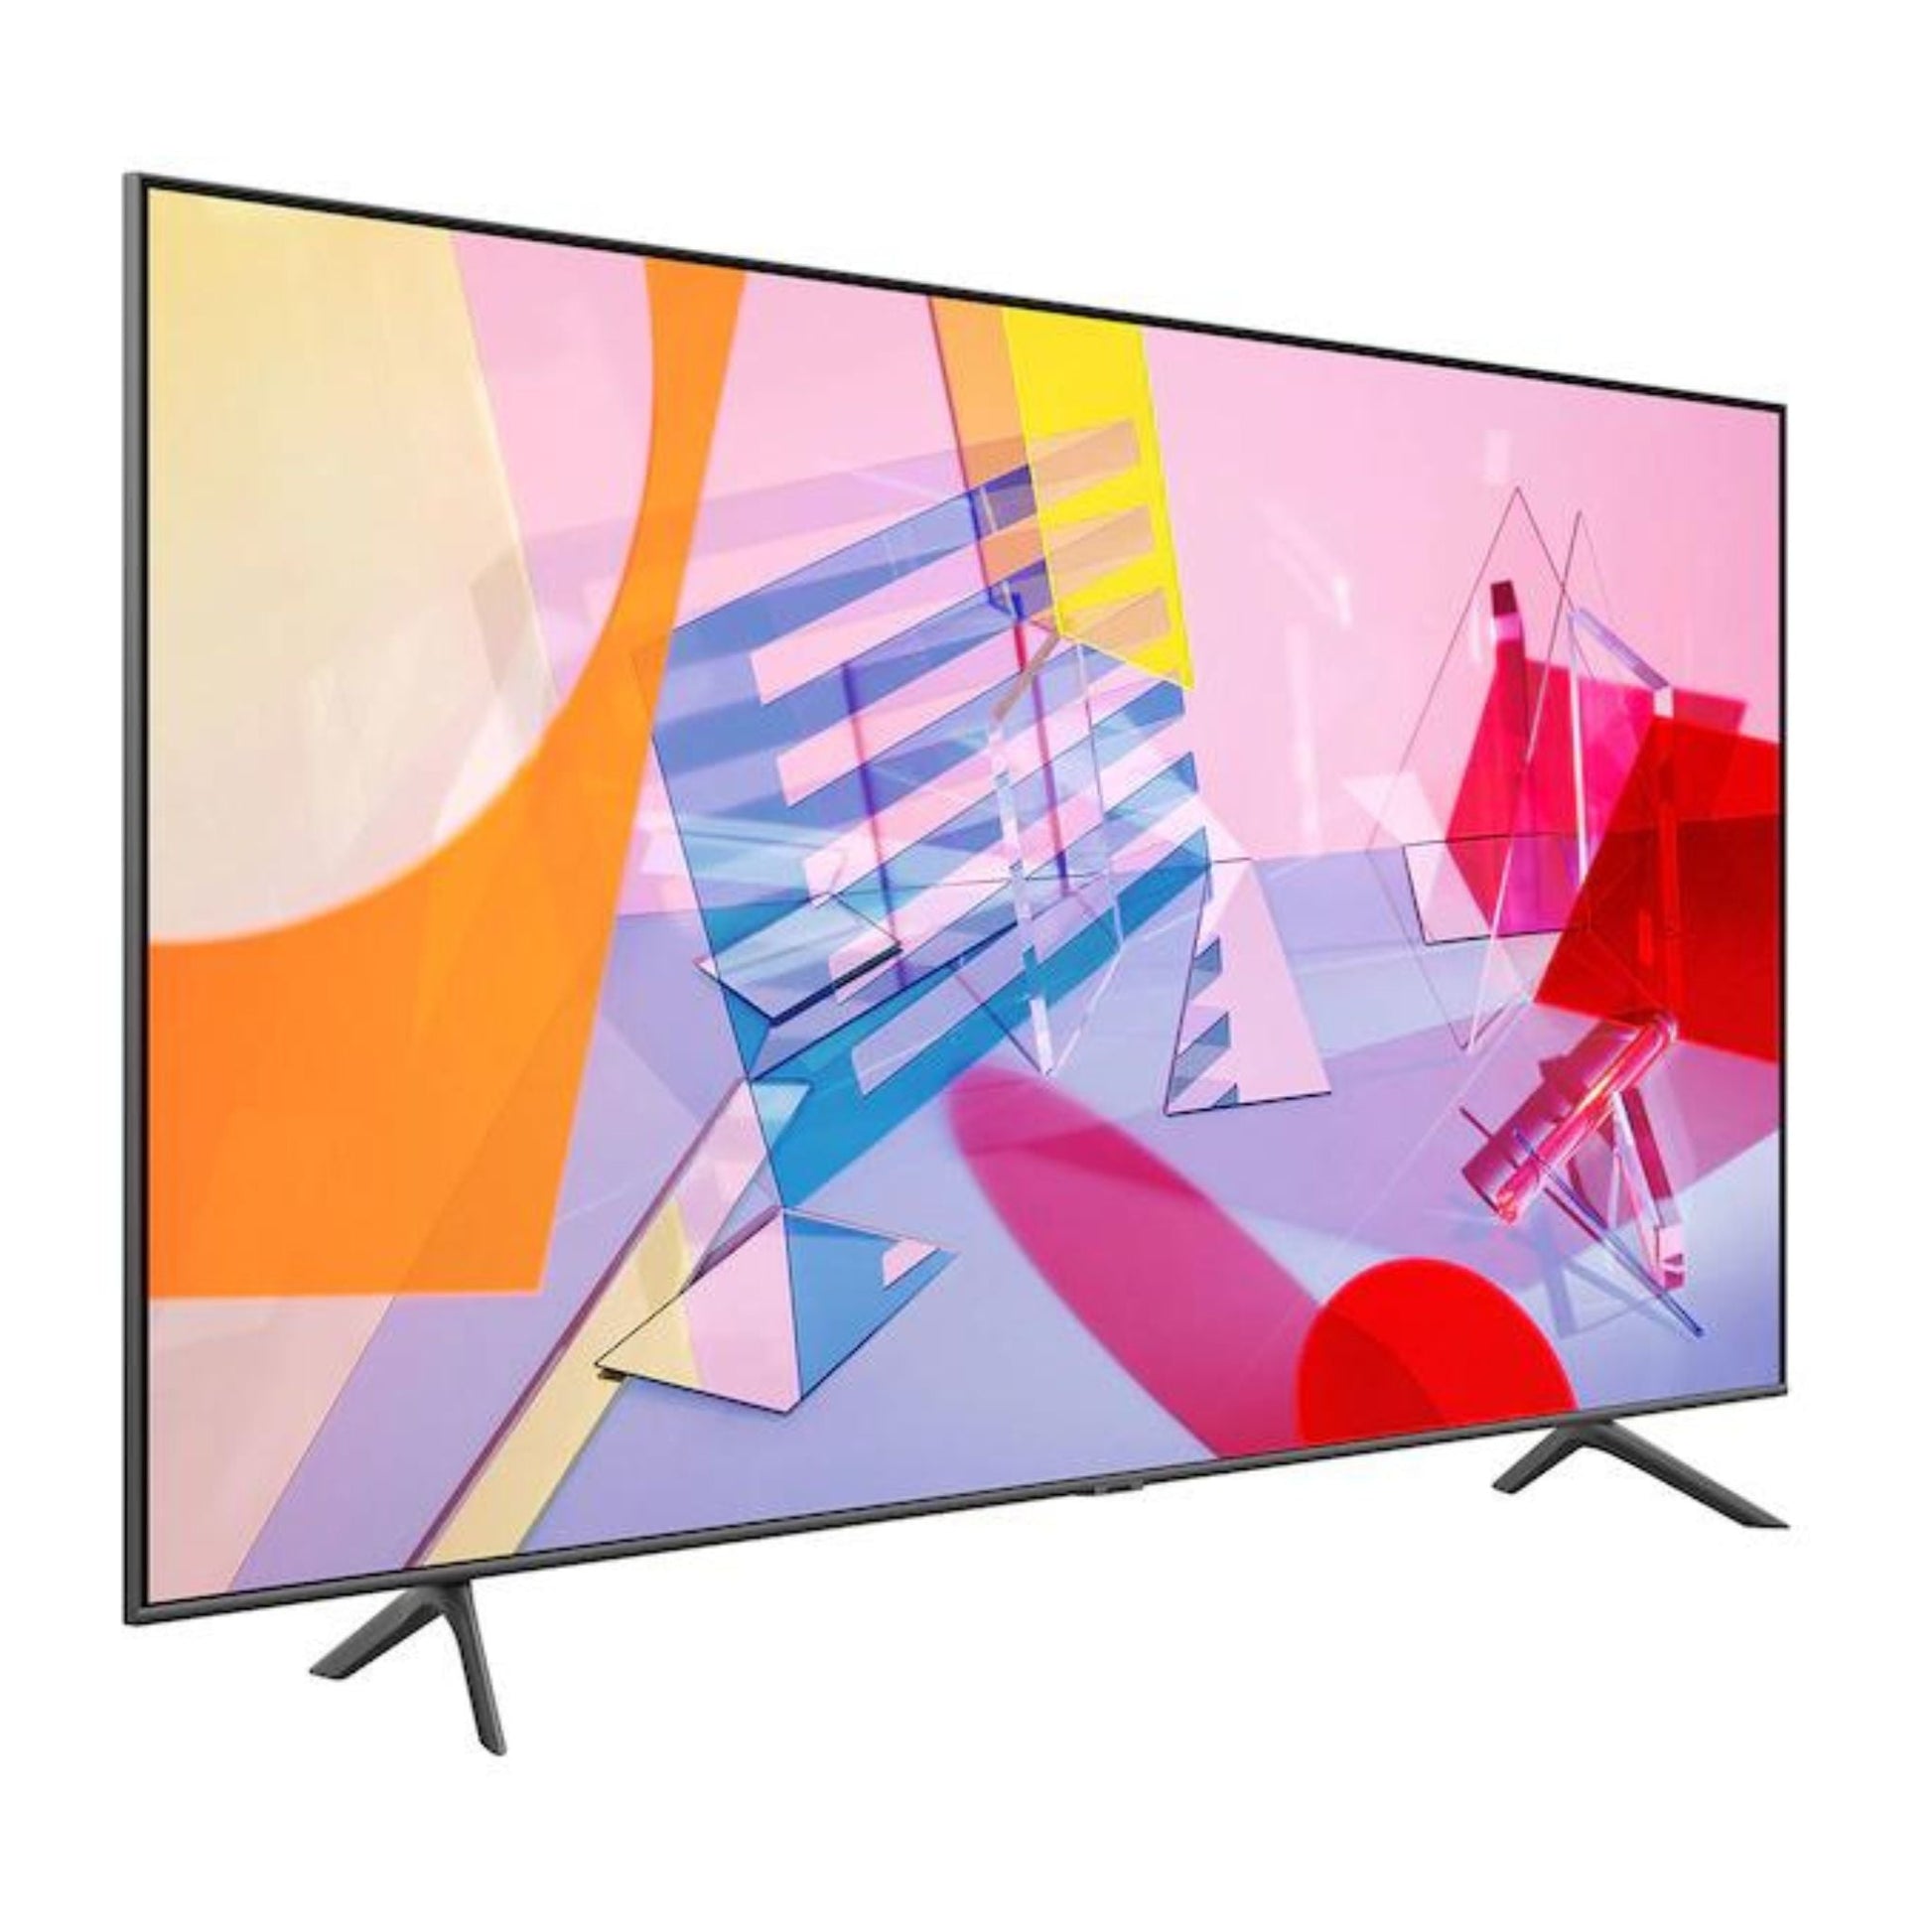 Samsung 70 inch Smart QLED TV, 70Q6T